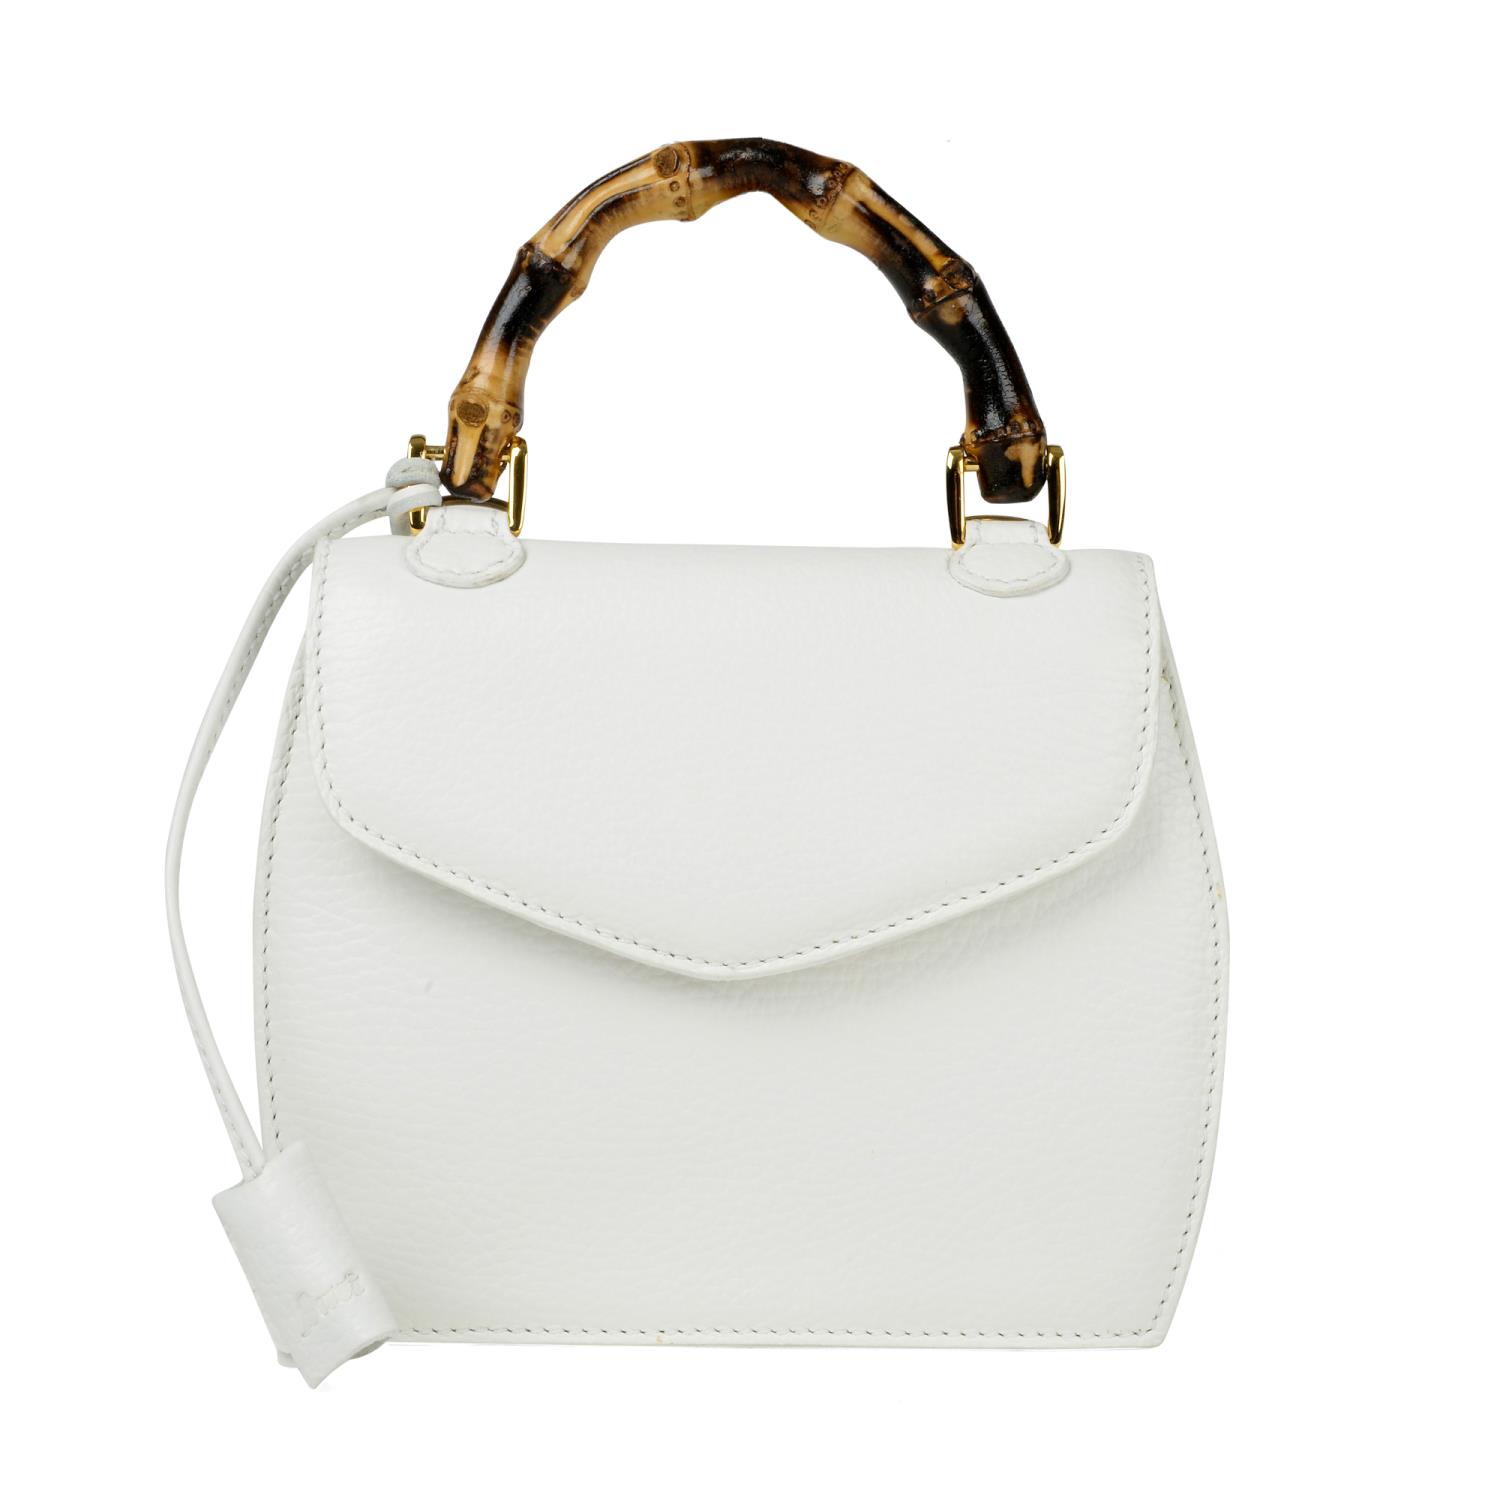 BUTI PELLETTERIE - a mini Minny white leather handbag.